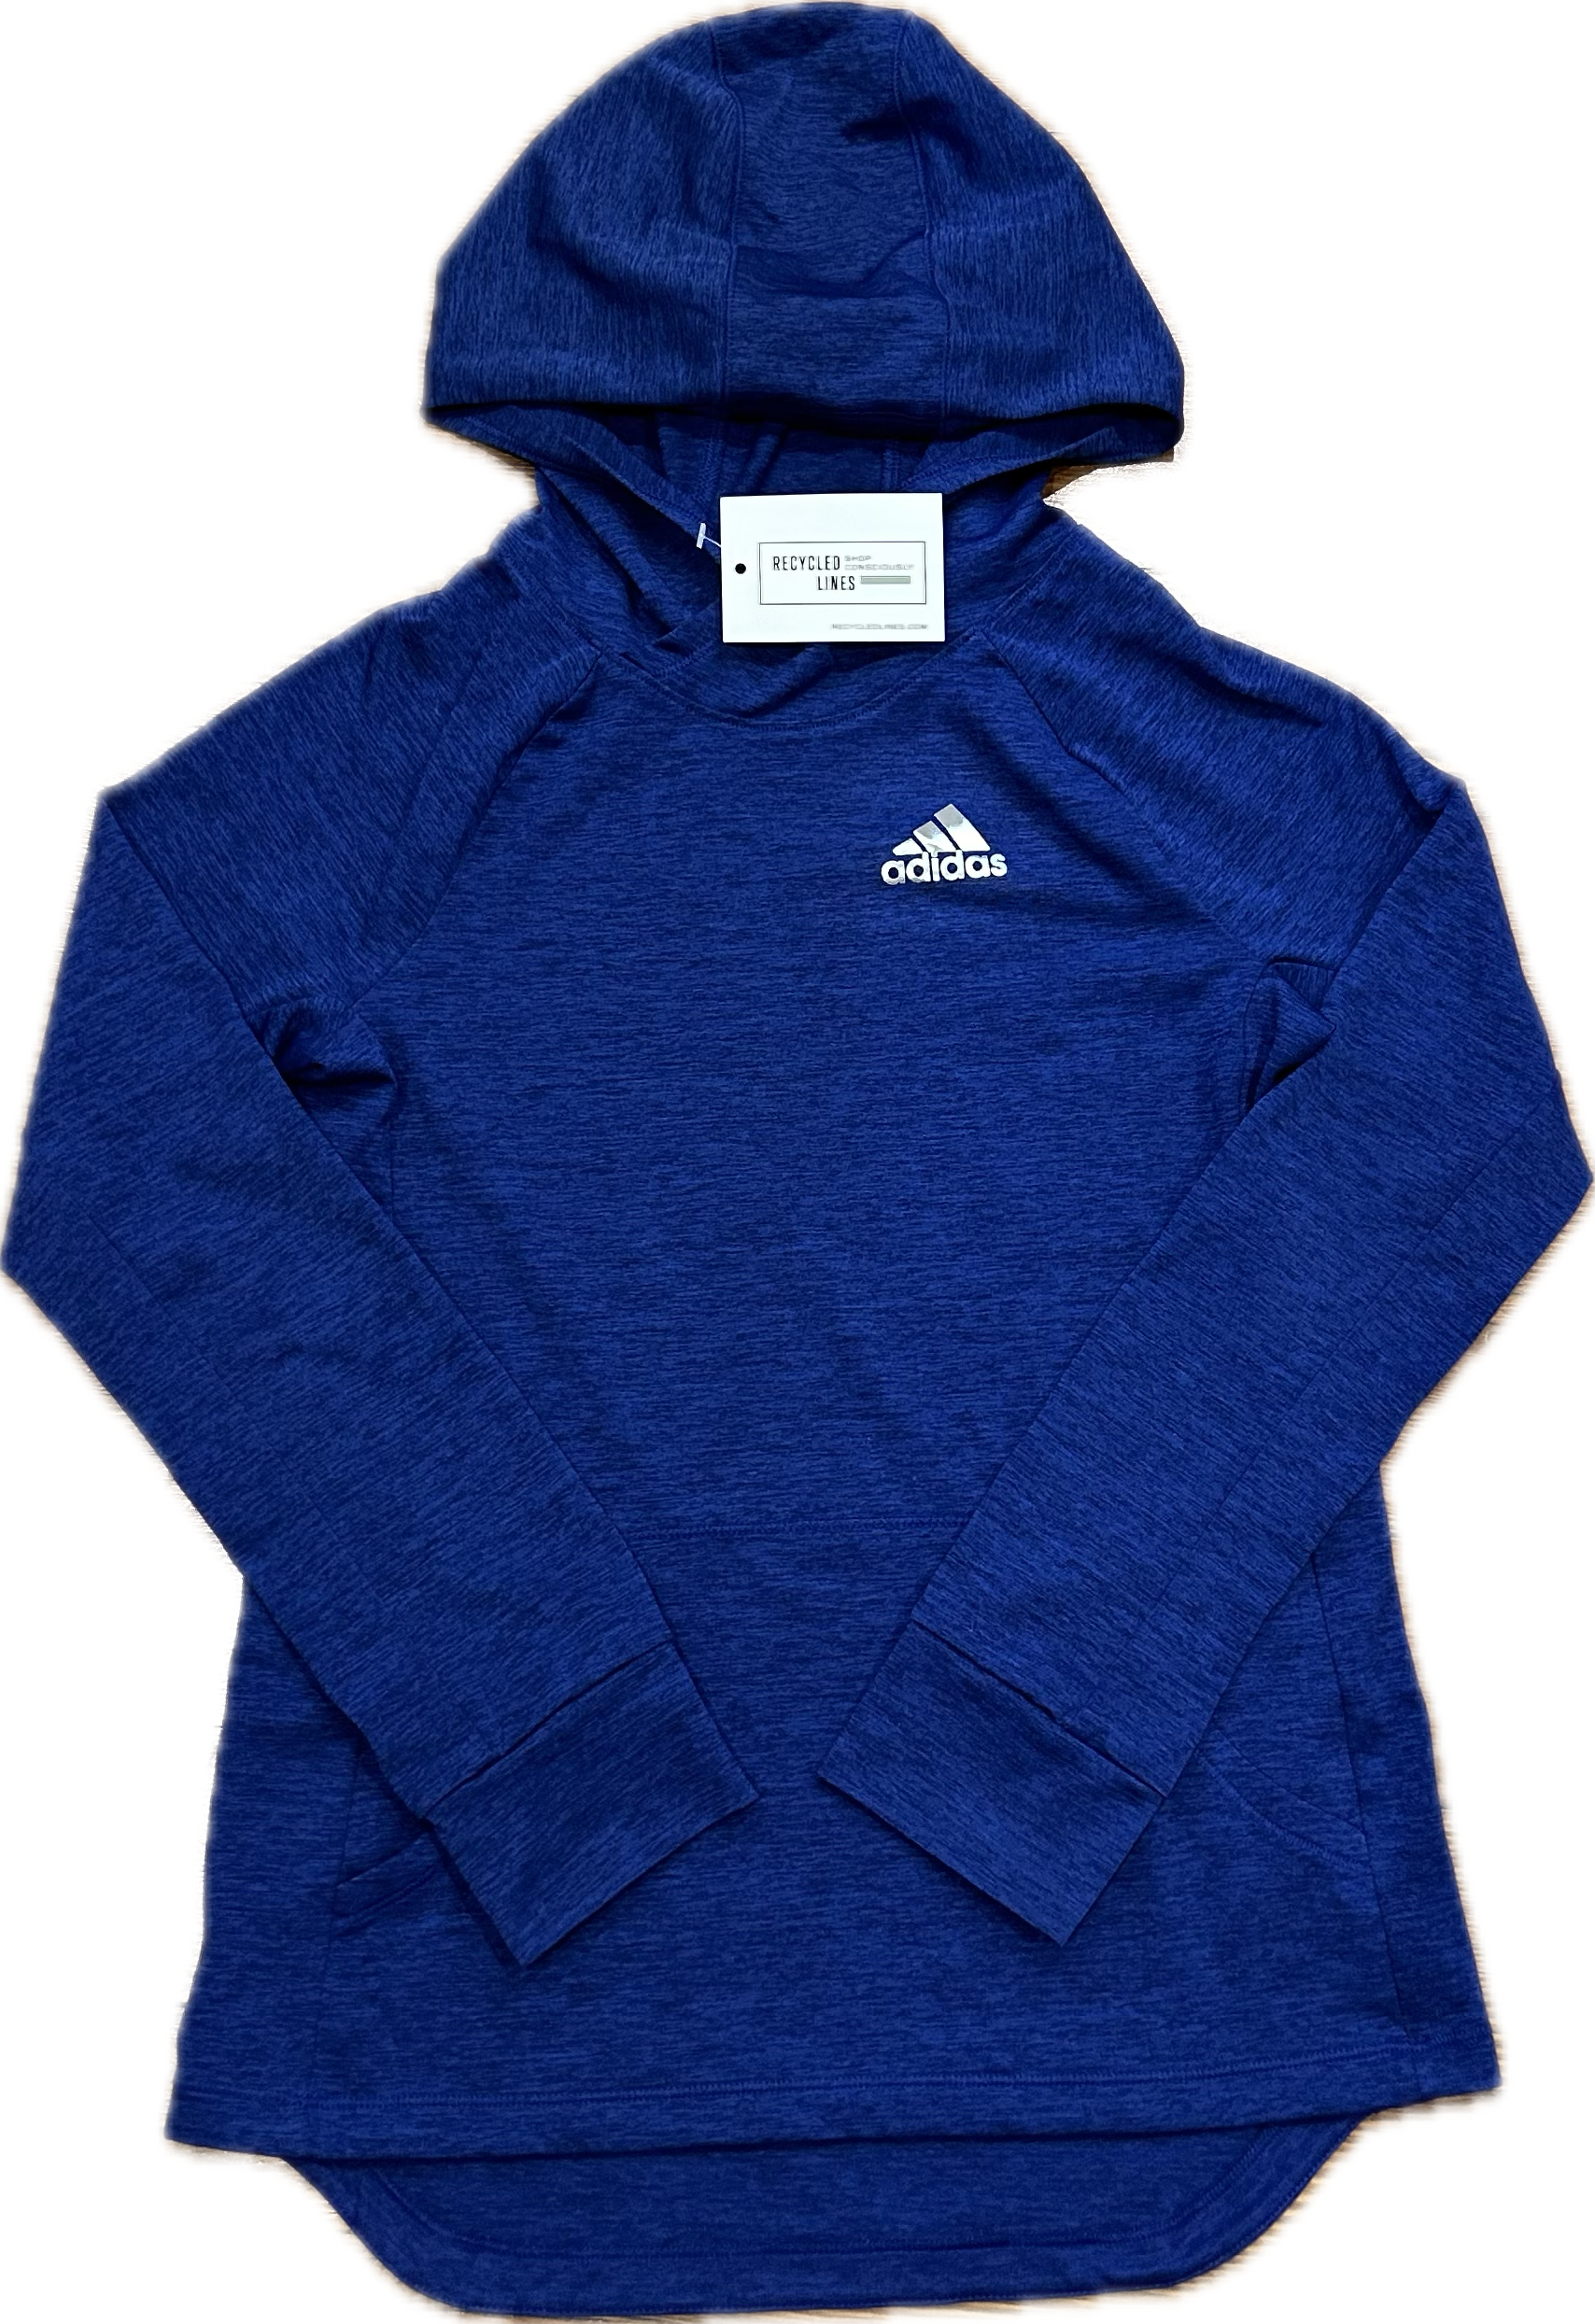 Adidas Hooded Shirt, Navy Boys Size M (10/12)